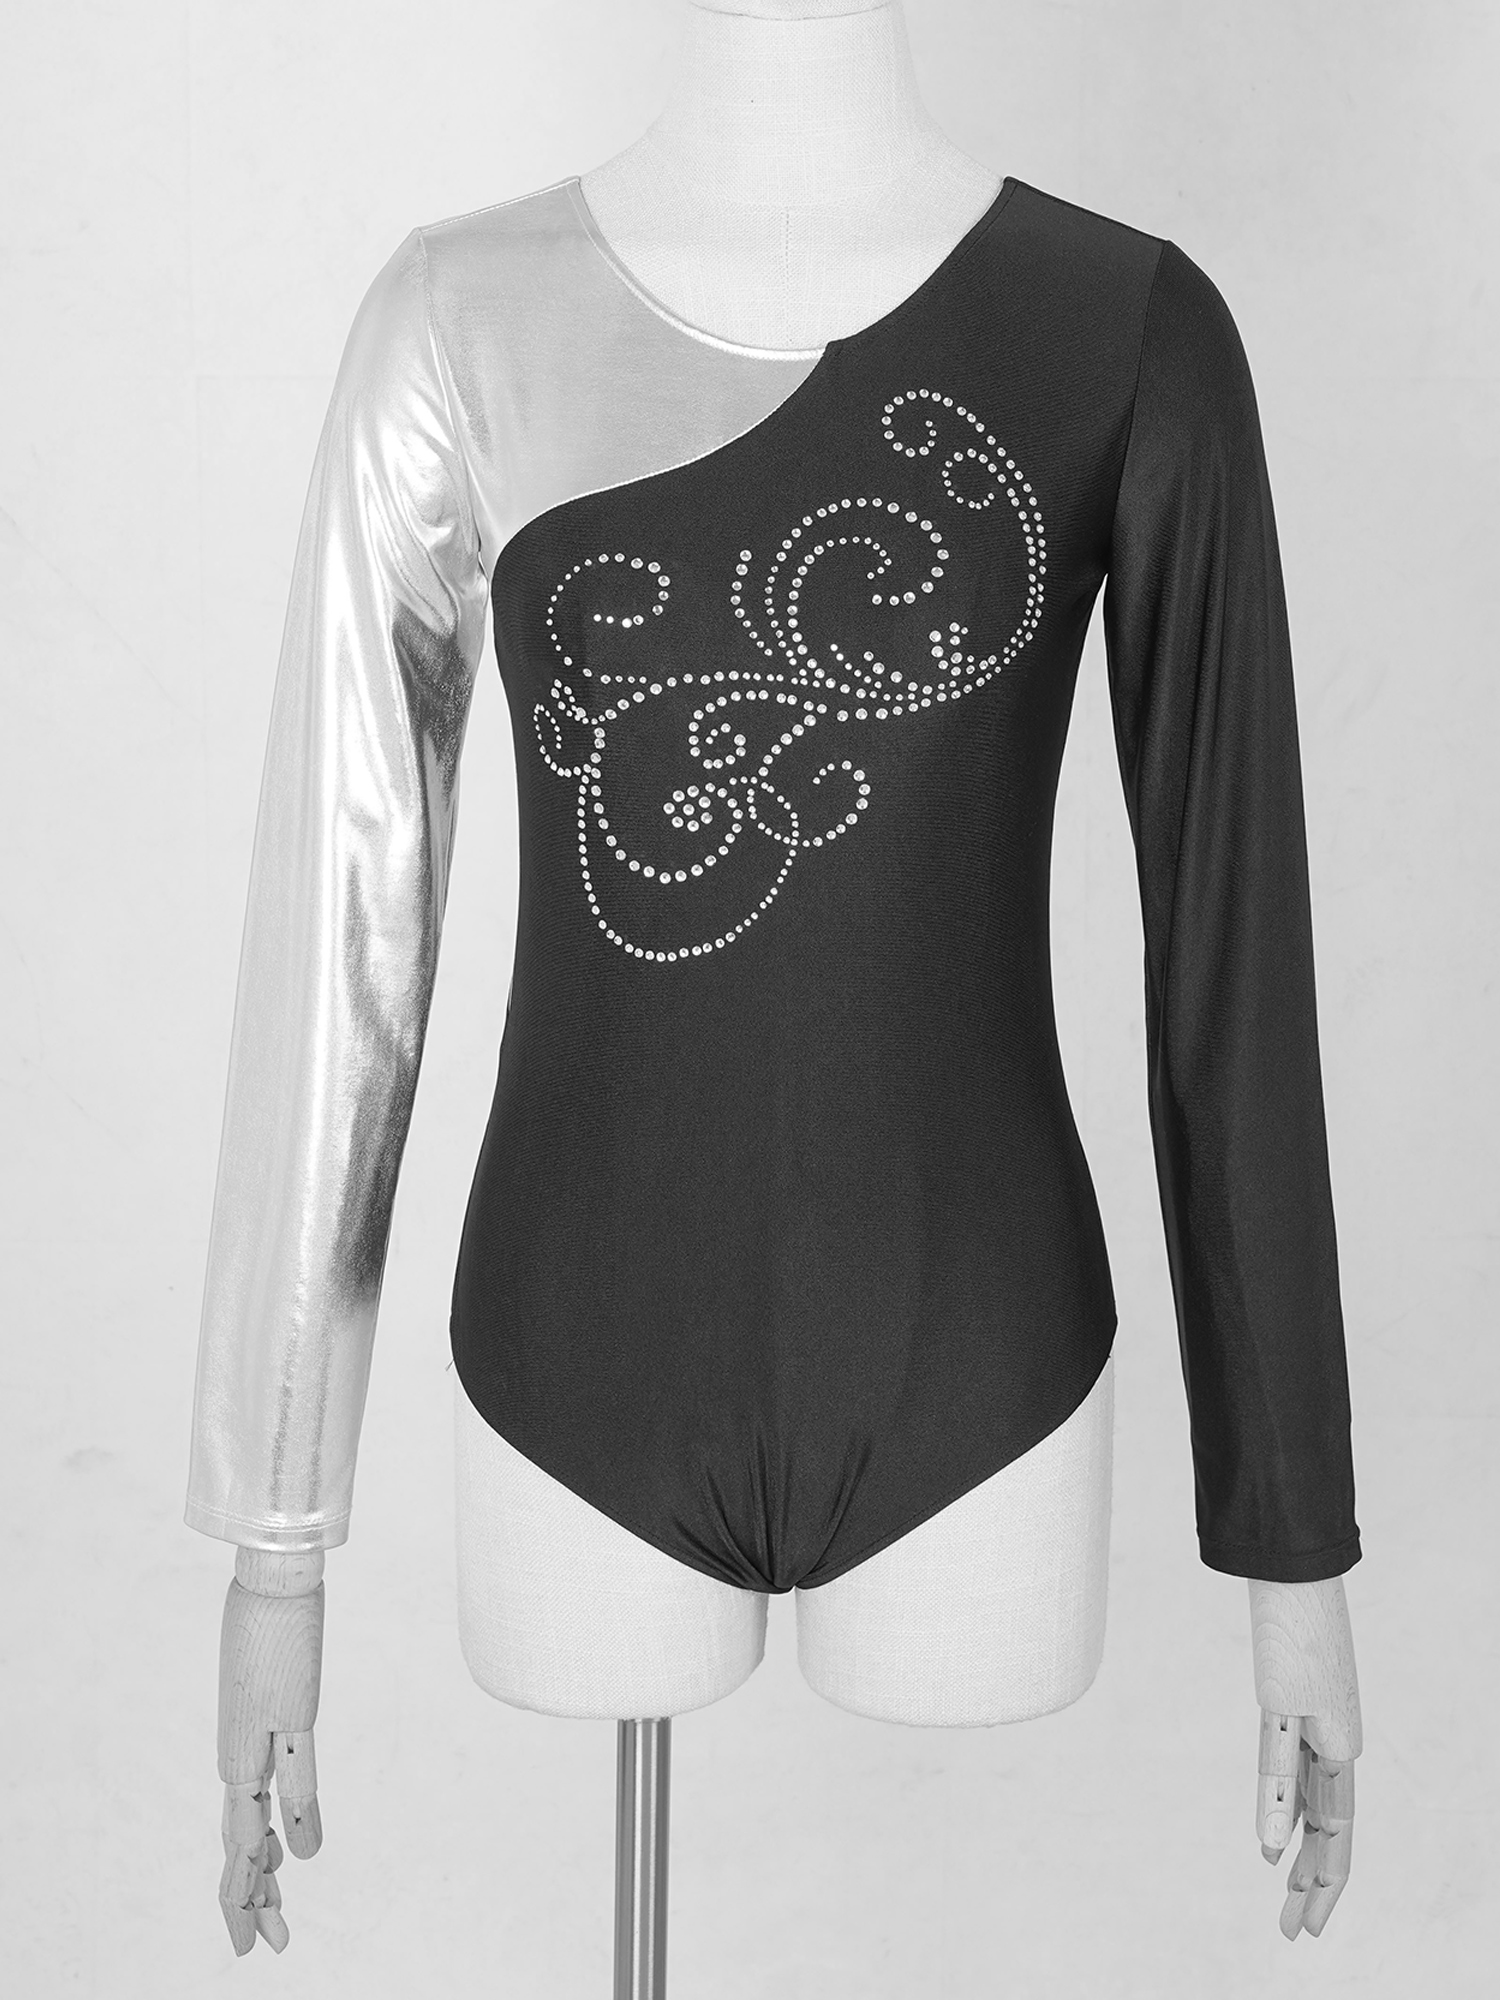 Kvinnor Glitter Rhinestone Shiny Metallic Gymnastics Leotard Ballet Dance Bodysuit Color Block långärmad Figur Skating Costumes